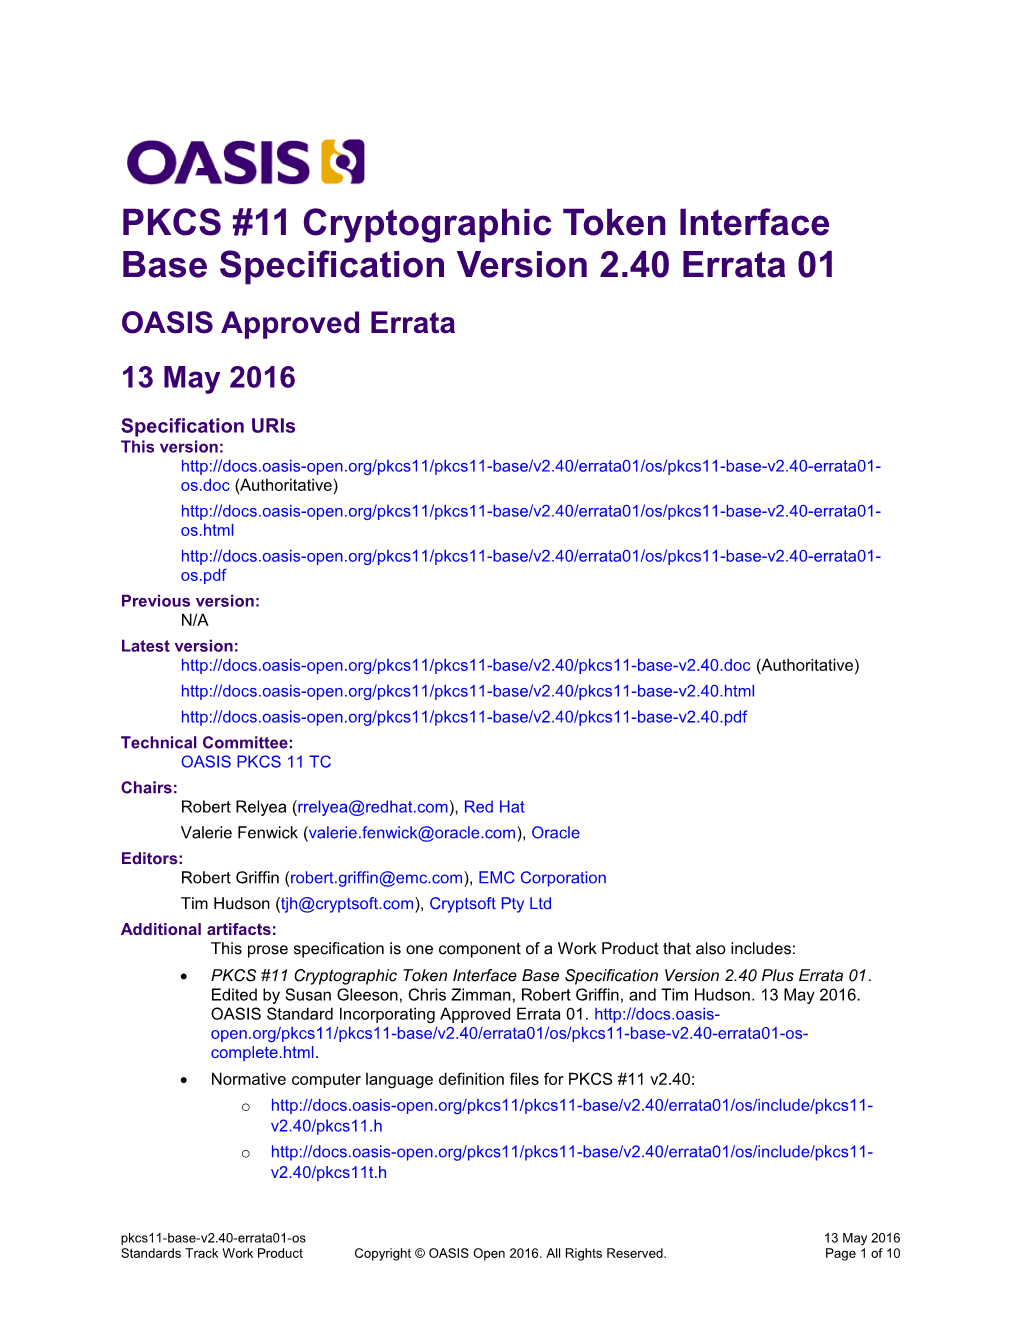 PKCS #11 Cryptographic Token Interface Base Specification Version 2.40 Errata 01 s1